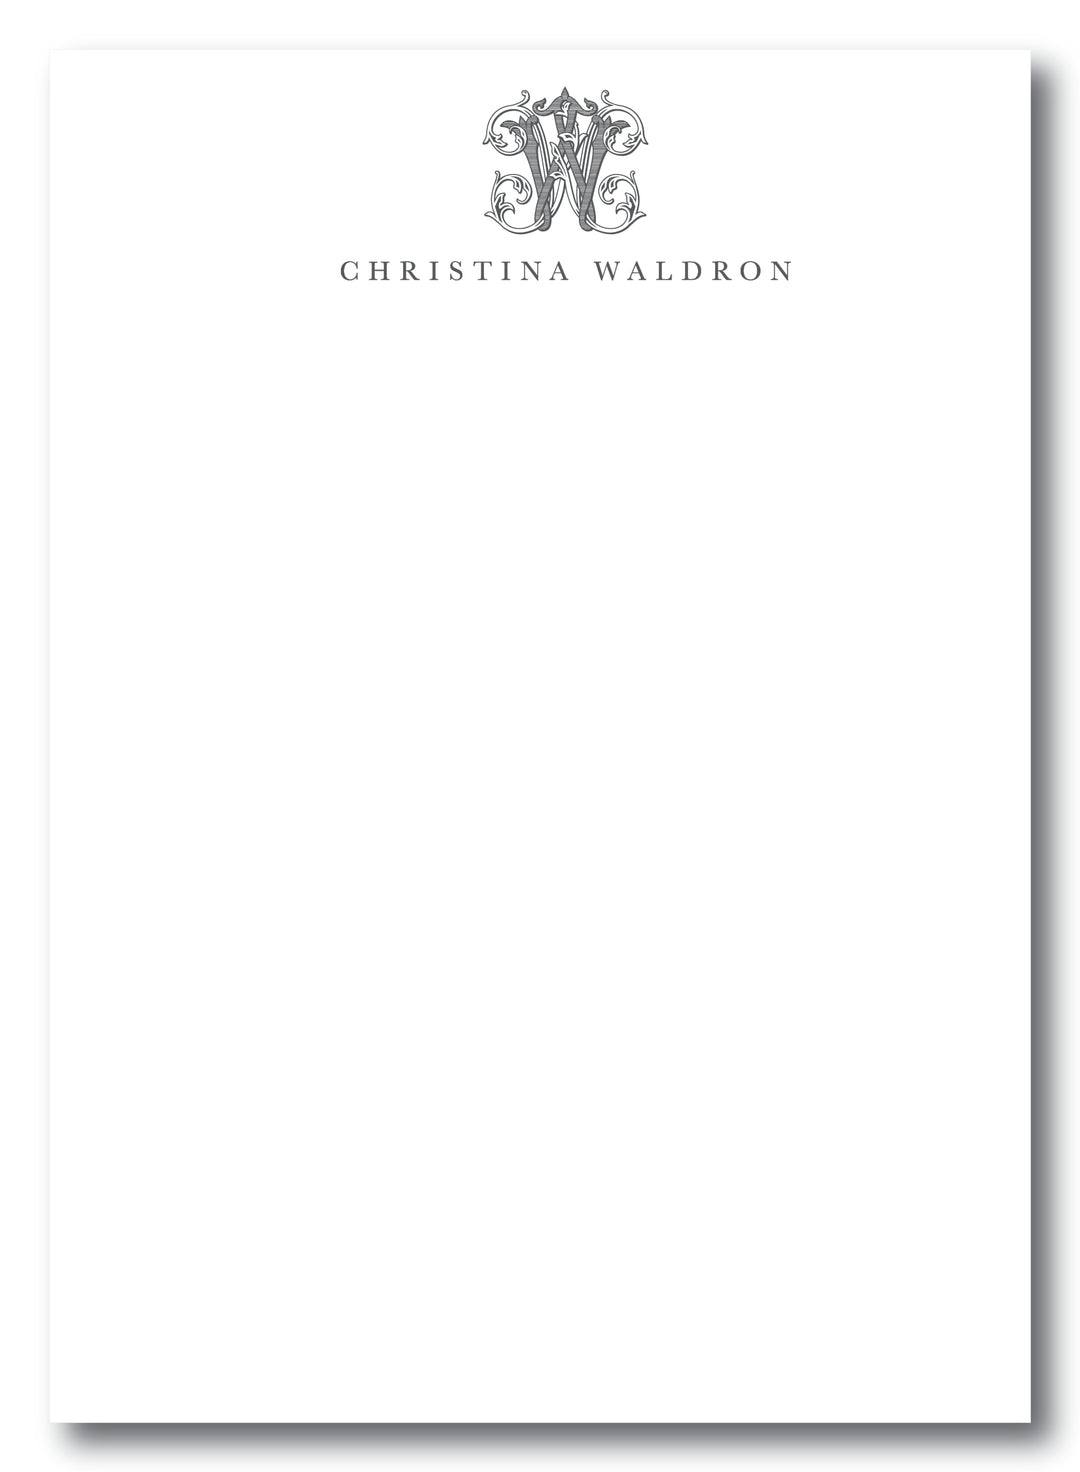 The Christina Notepad